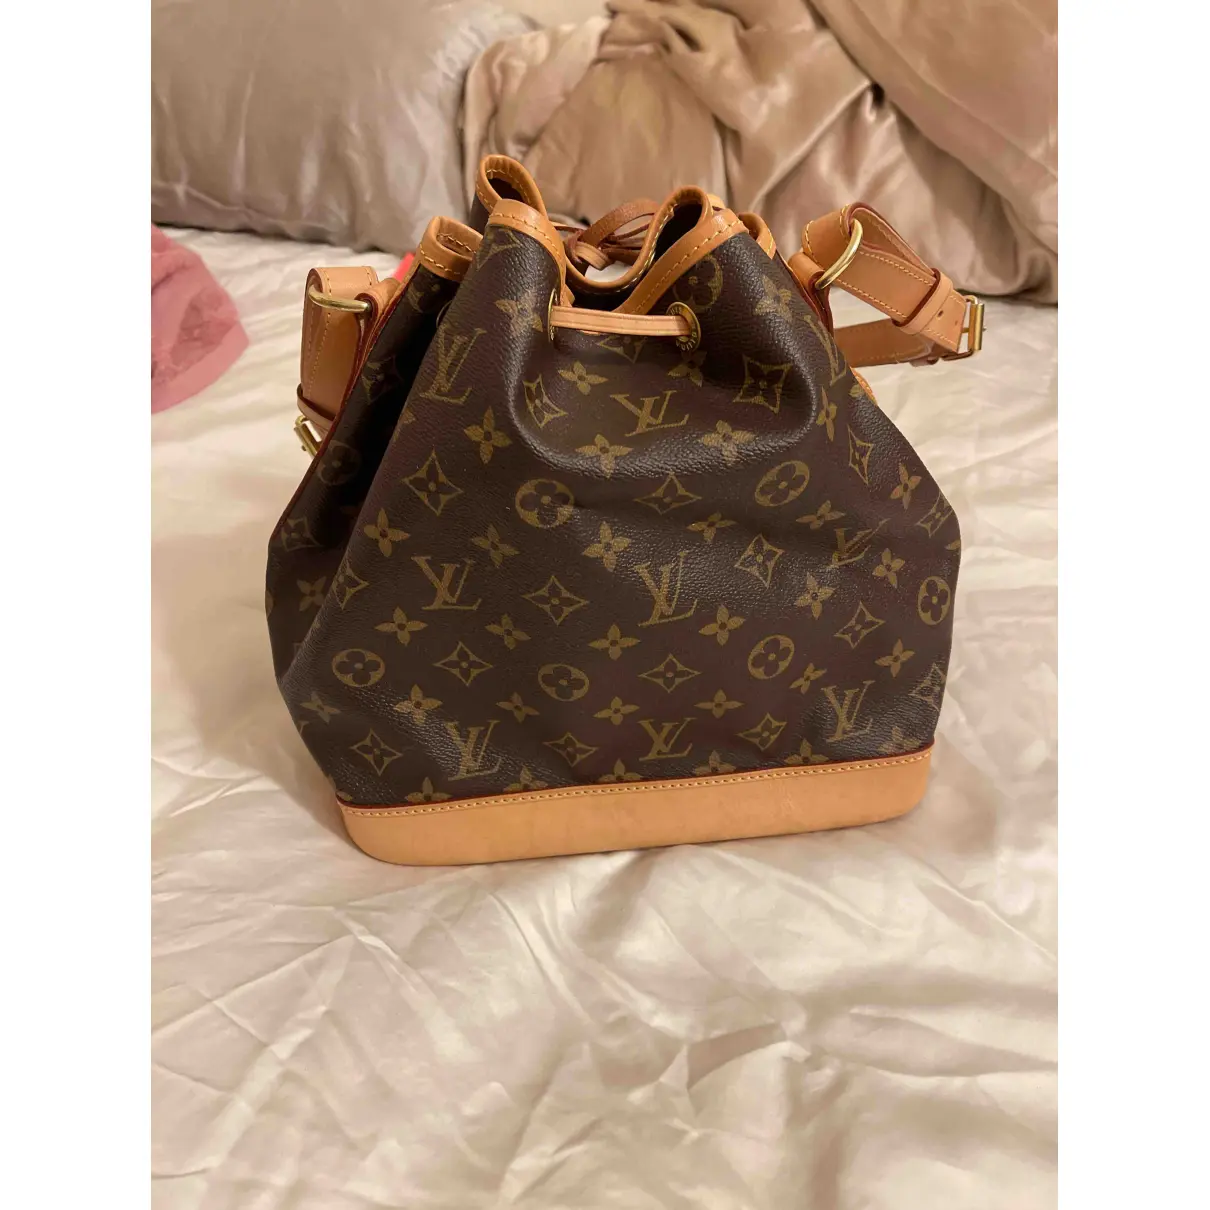 Buy Louis Vuitton Noé cloth handbag online